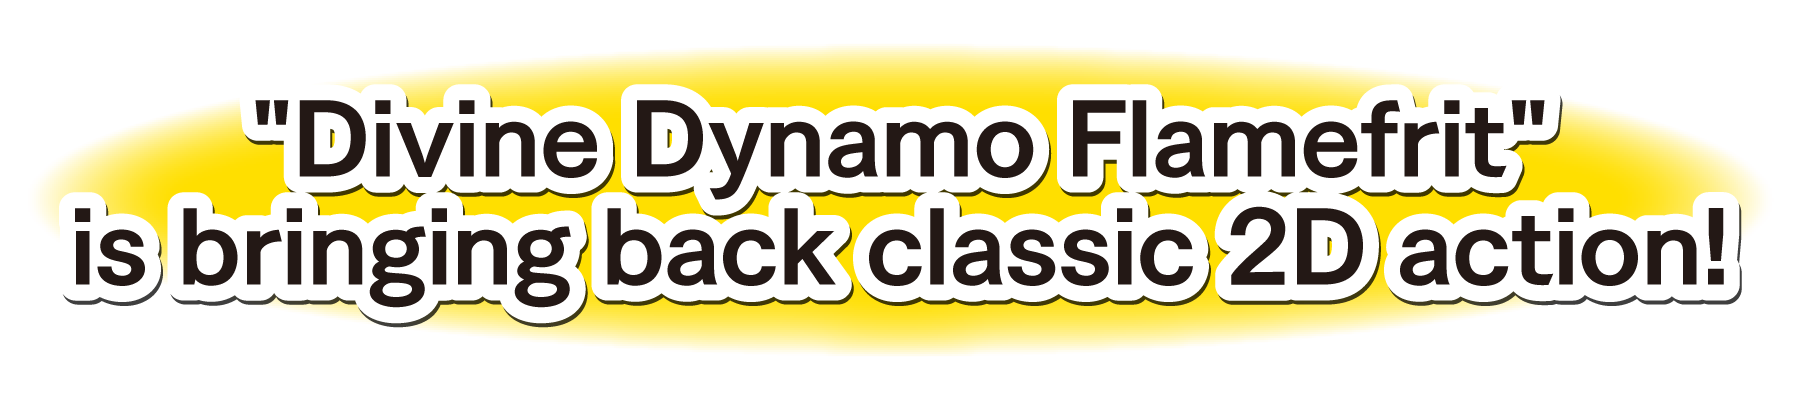 Divine Dynamo Flamefrit is bringing back classic 2D action!